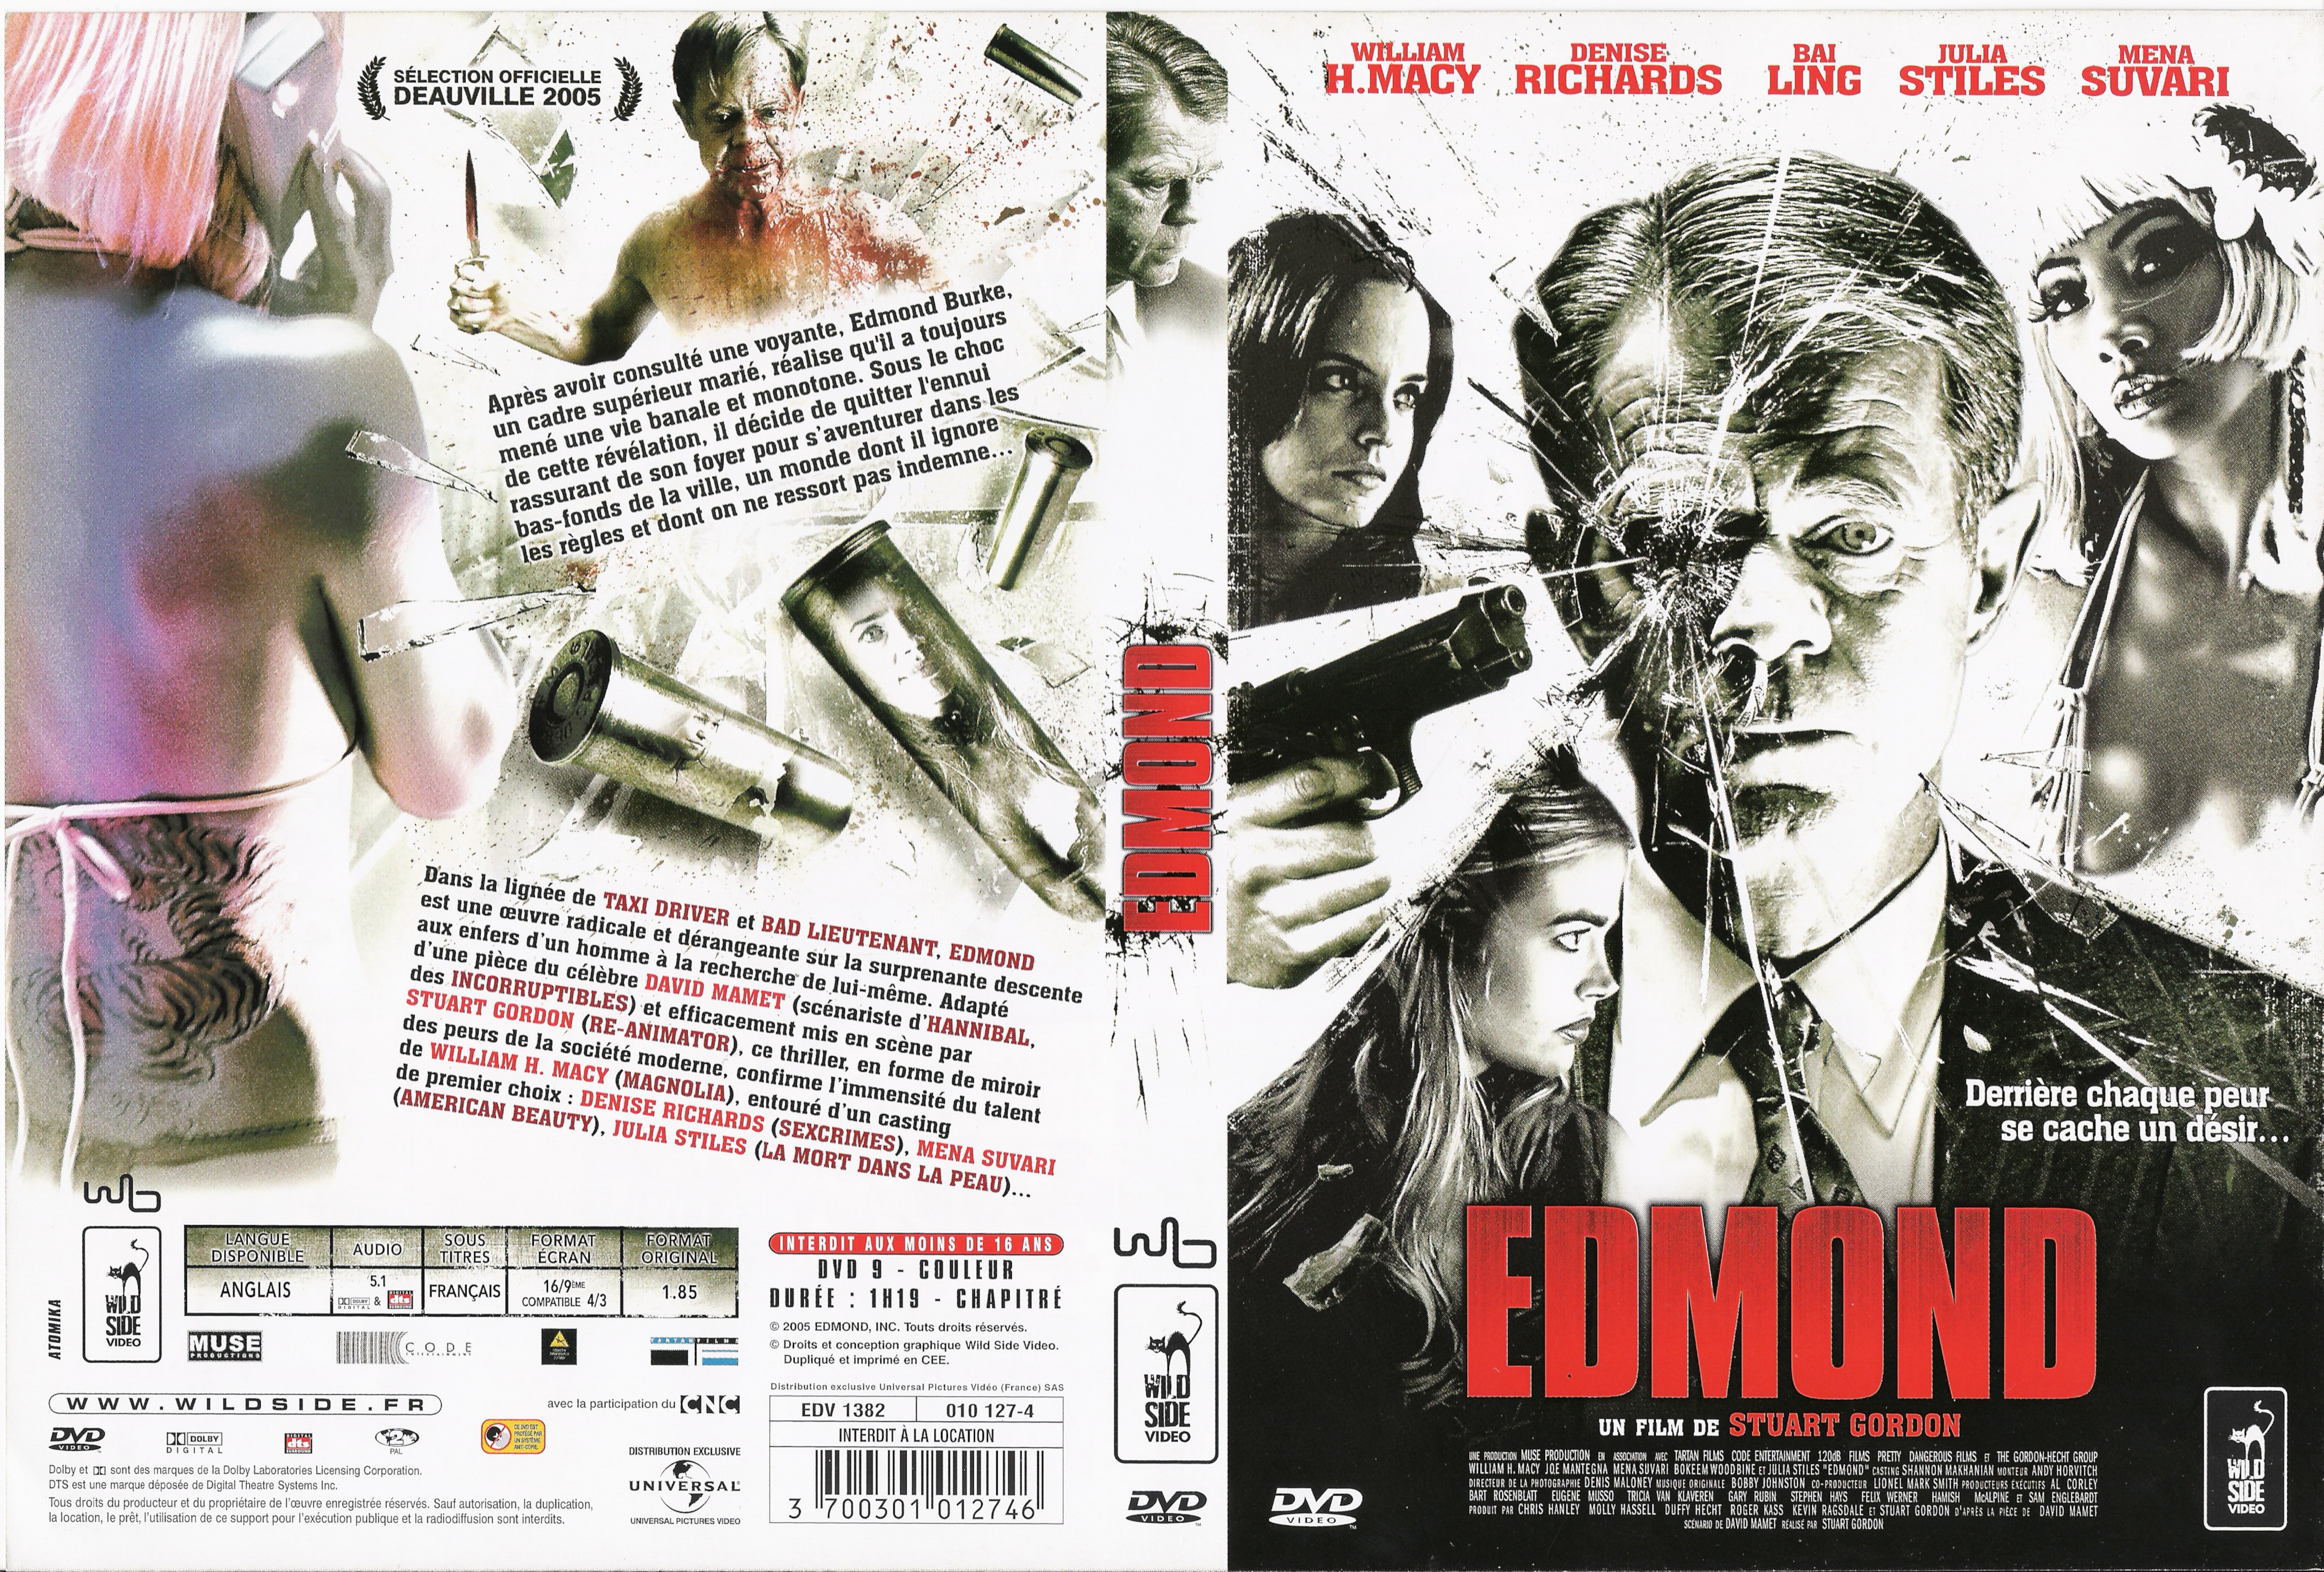 Jaquette DVD Edmond